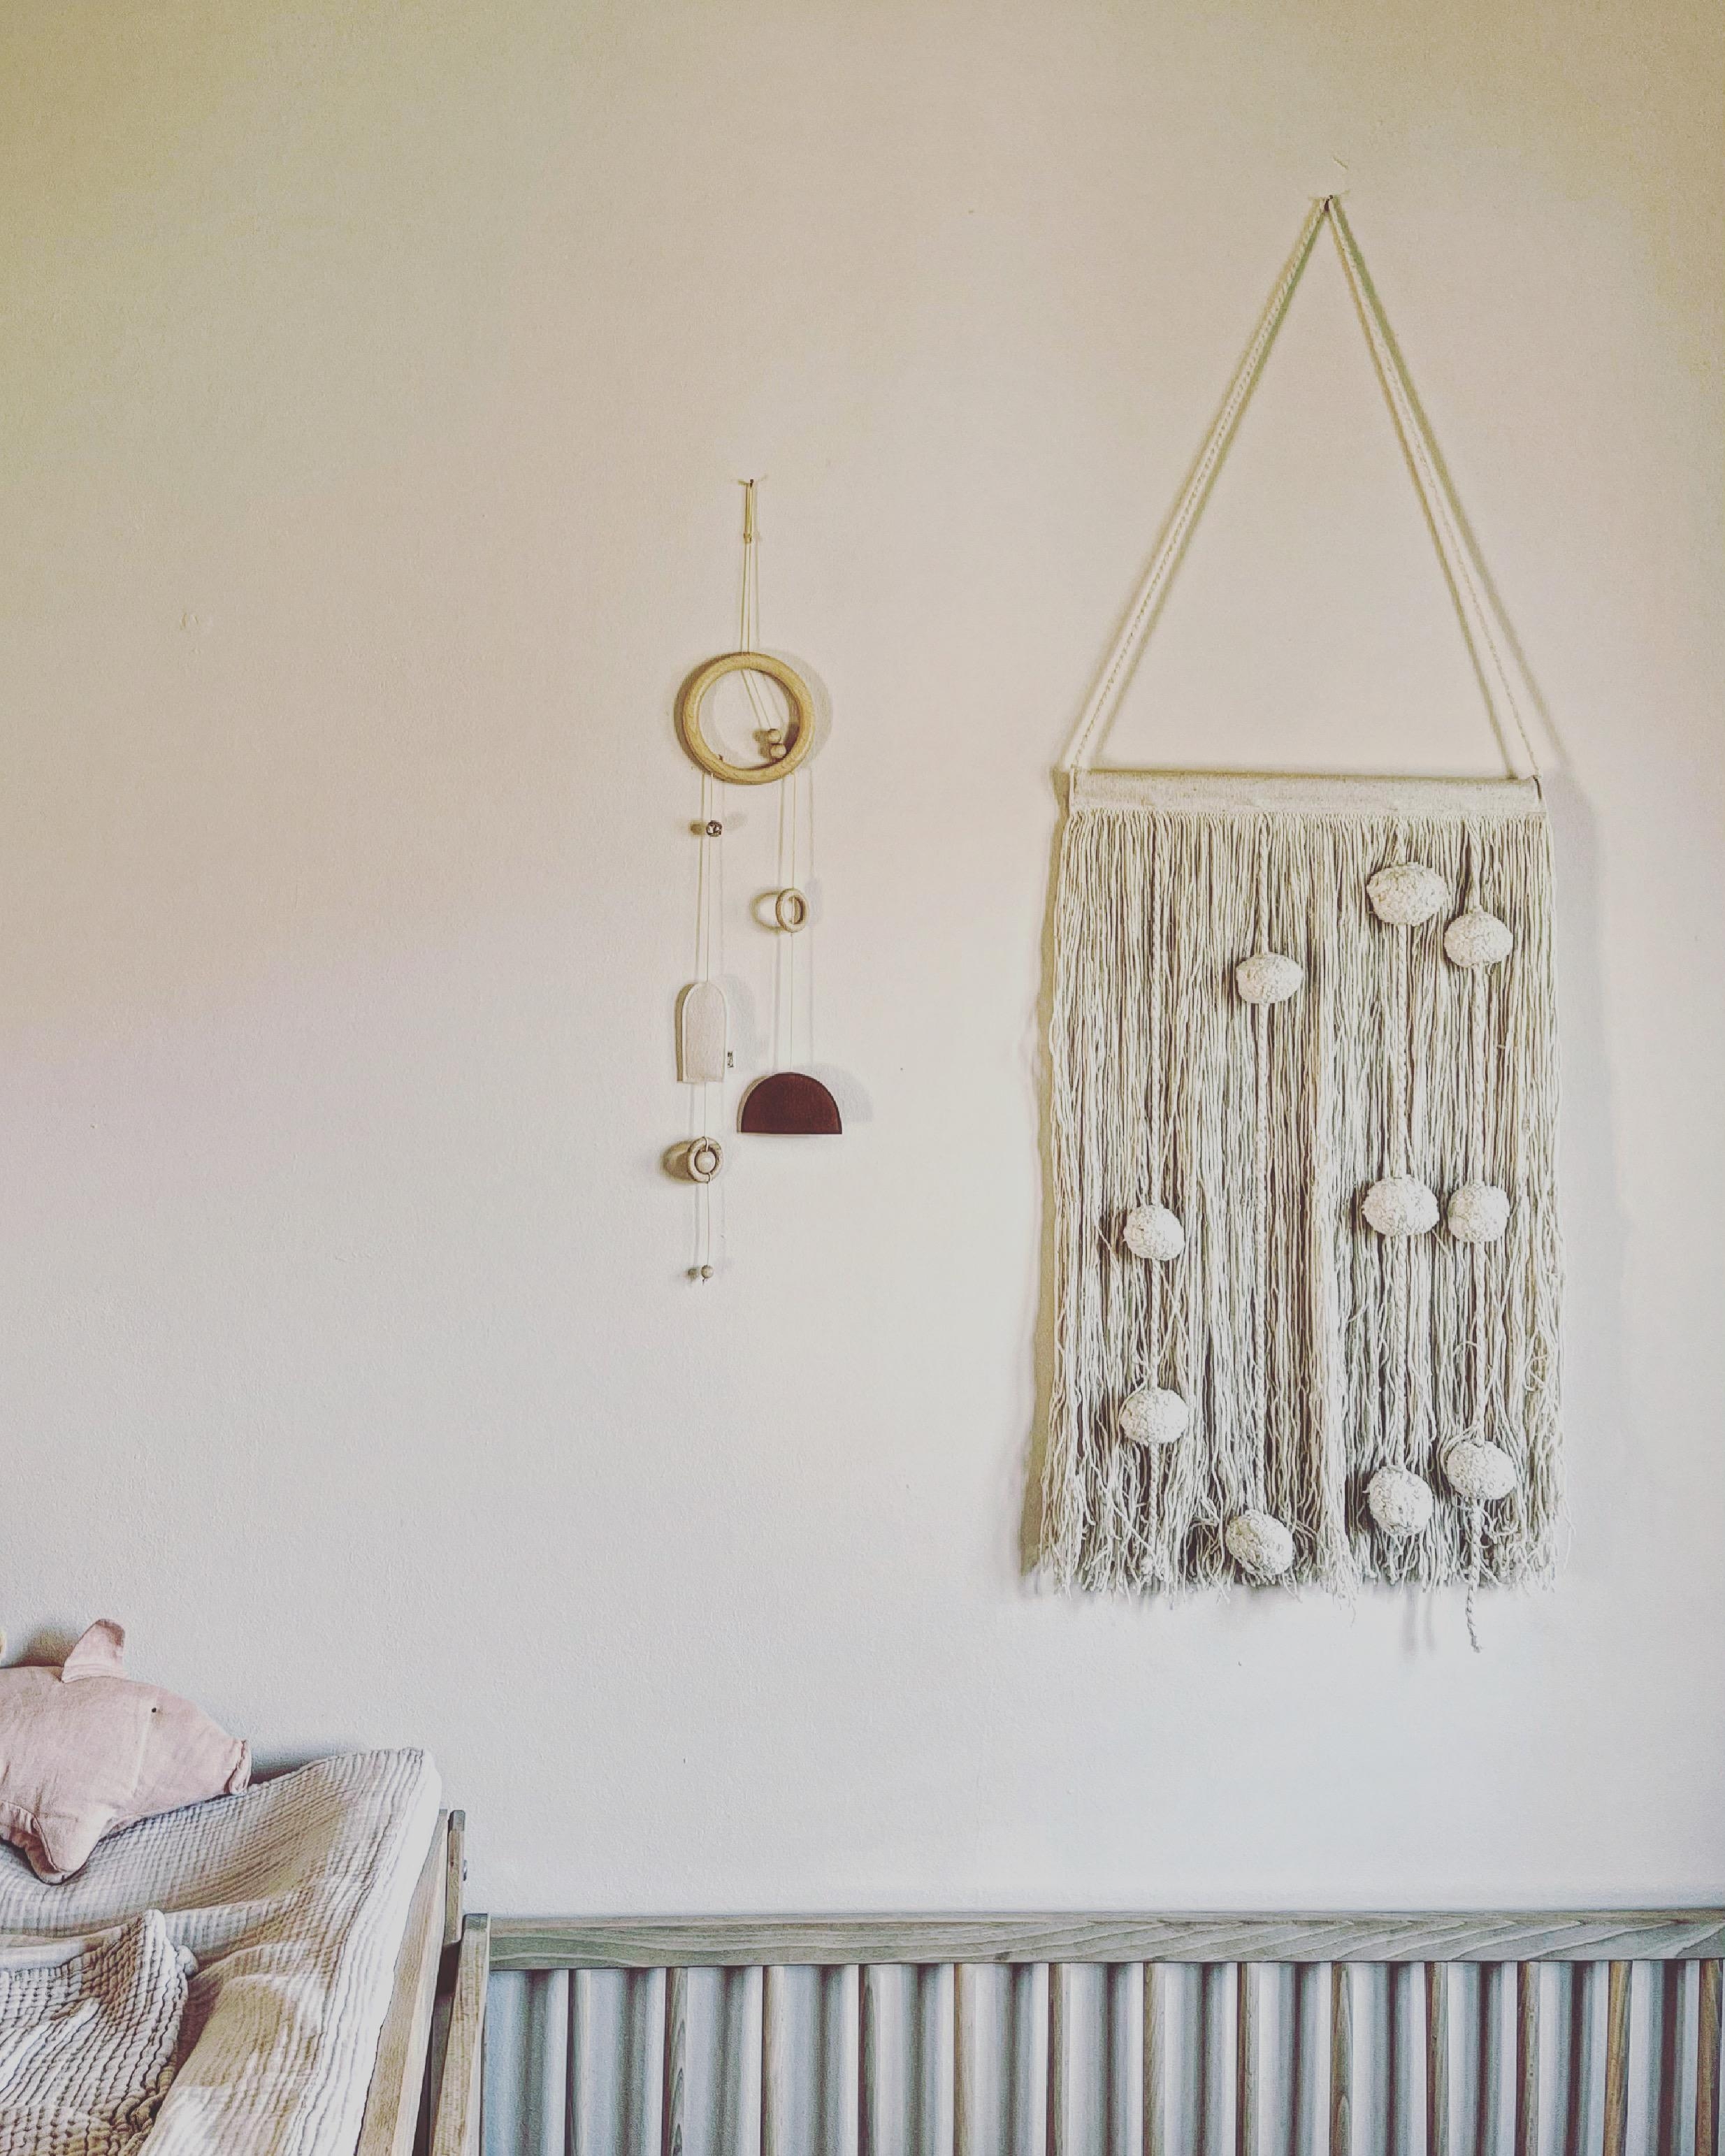 Details #minimalismus #minimarkt #favouritestoreintown #housenine #interior #babyroom #slowfamily